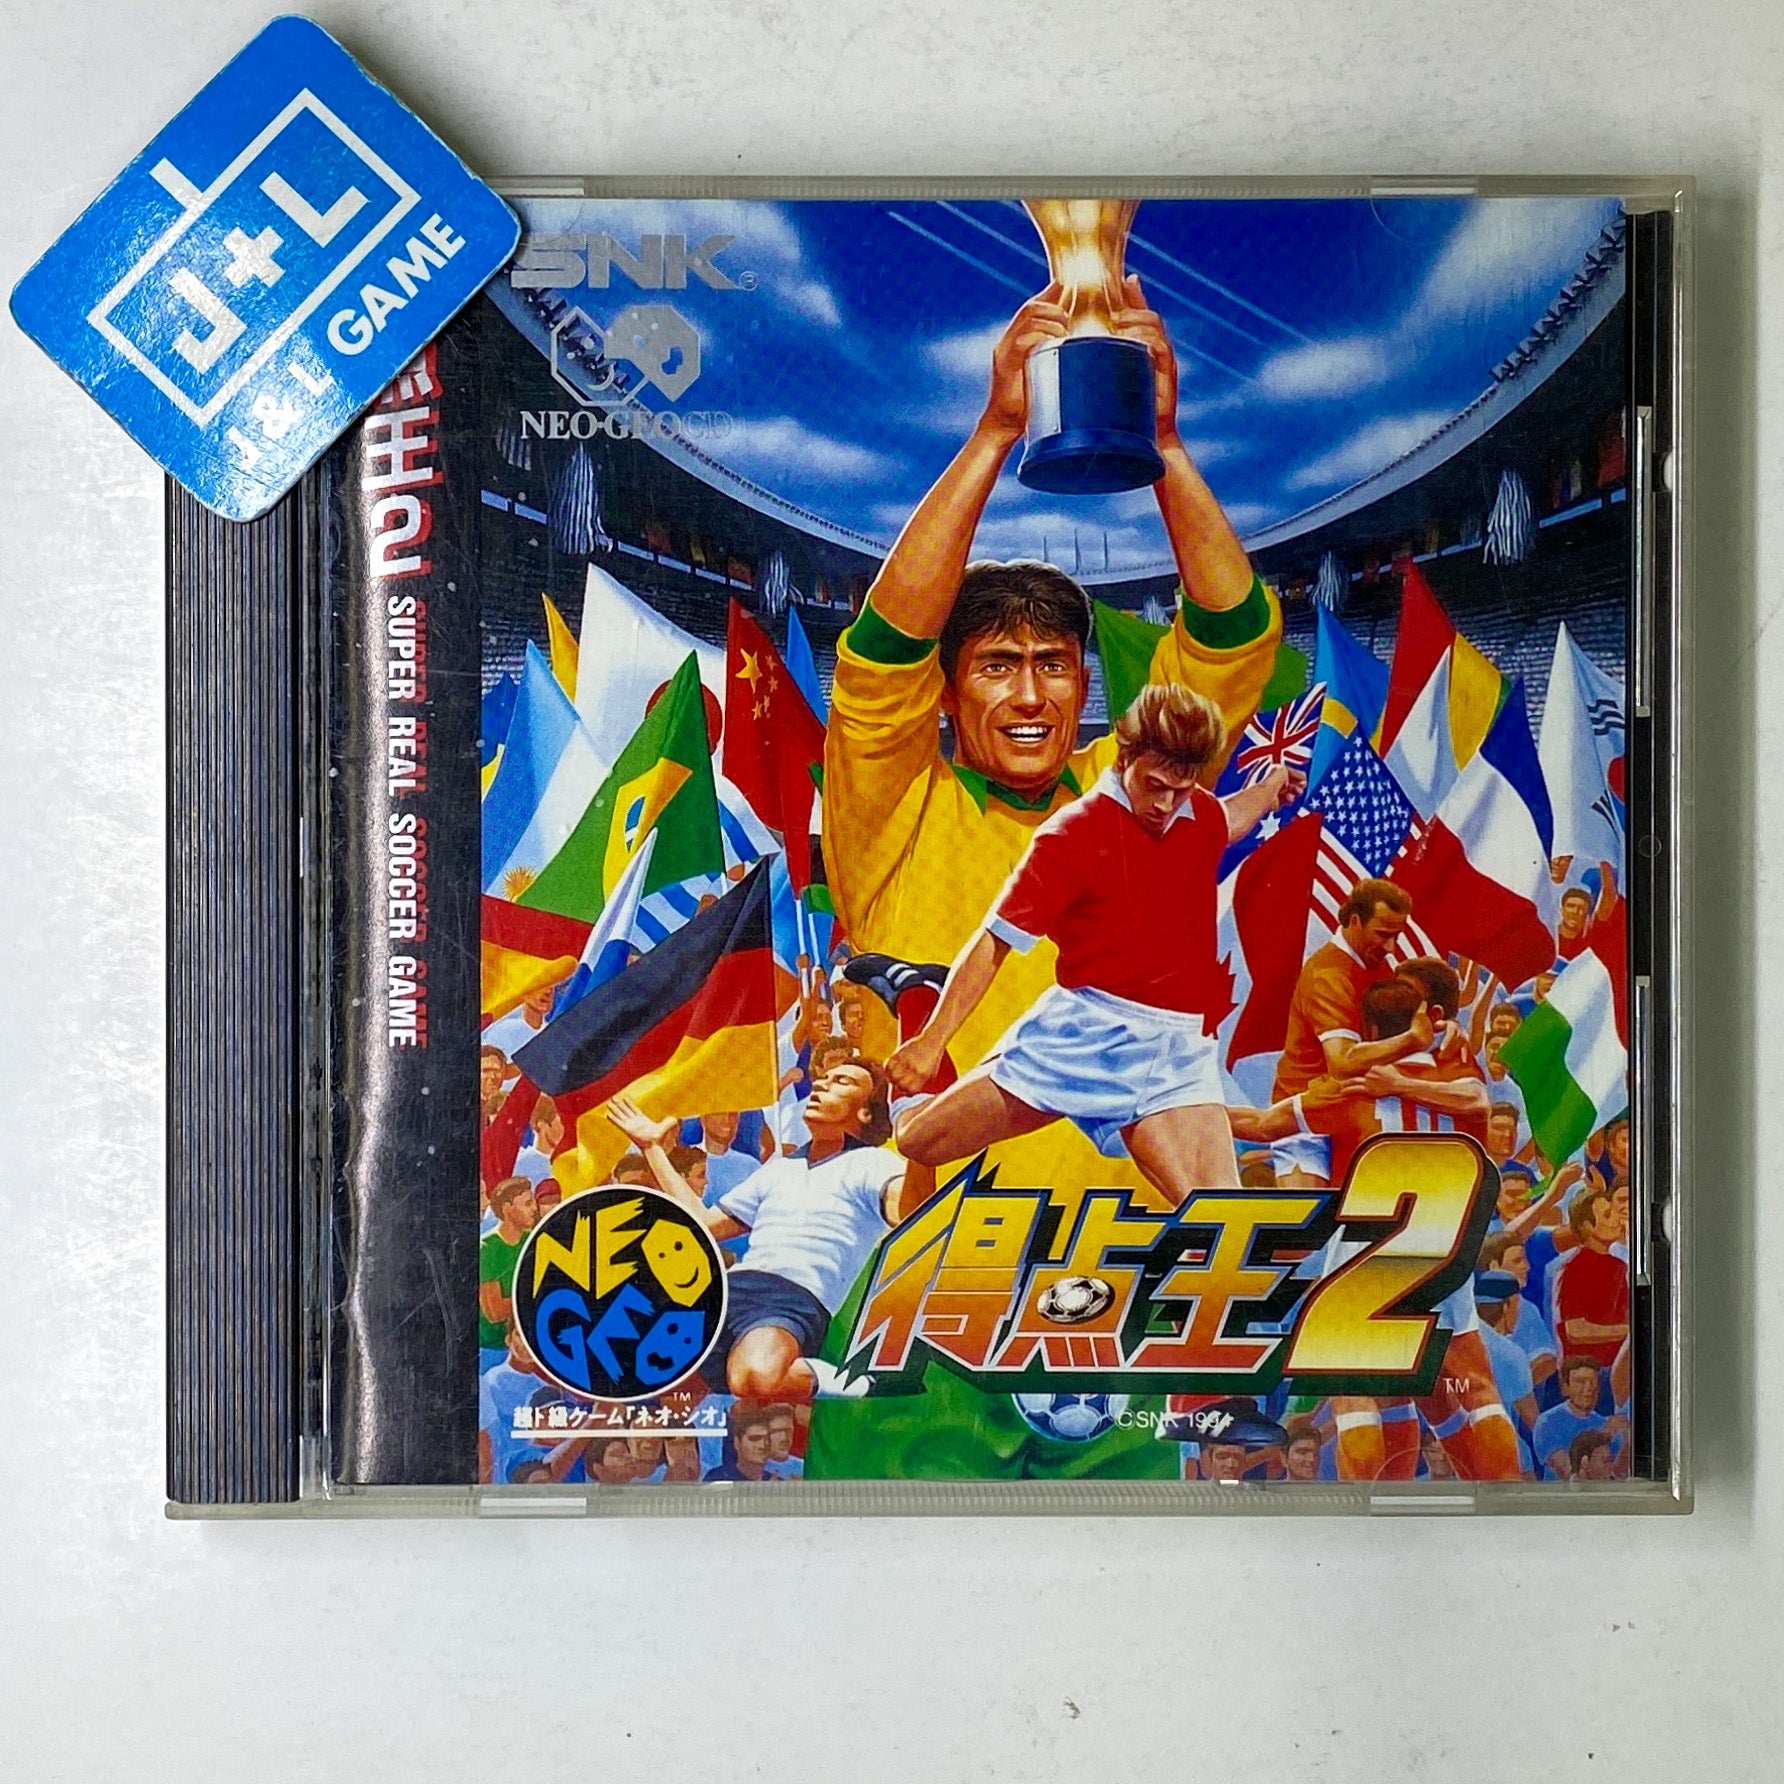 Tokuten Oh 2 - SNK NeoGeo CD (Japanese Import) [Pre-Owned]